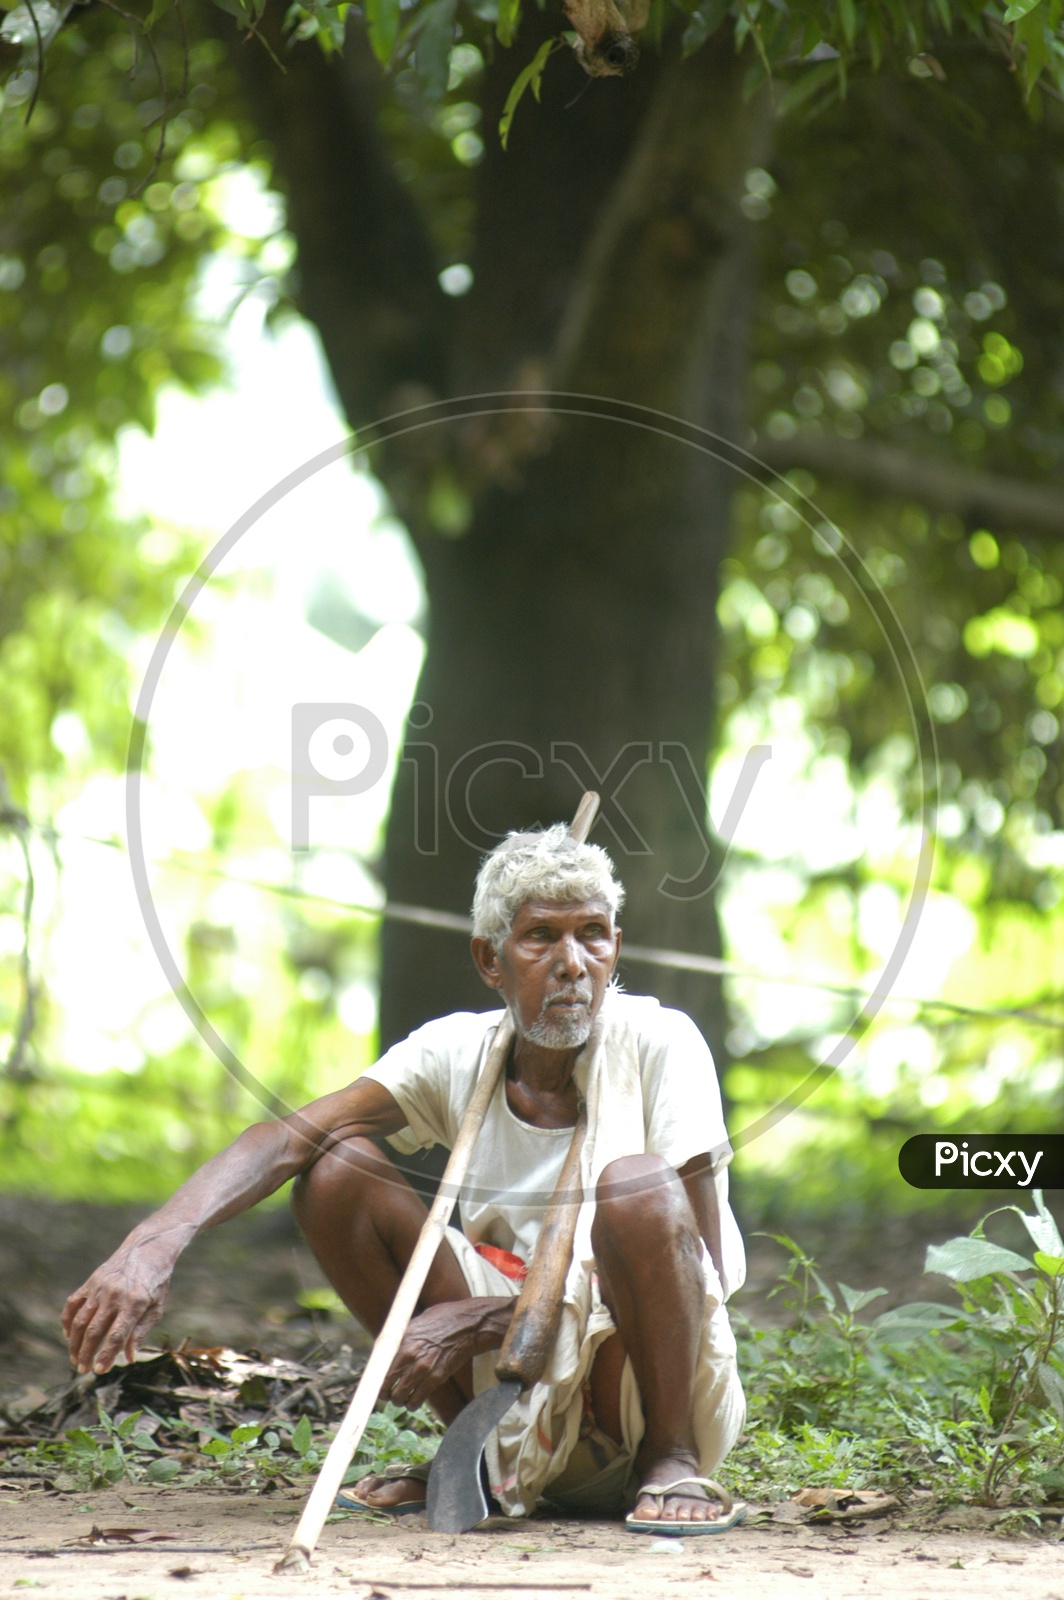 An Old Man Sitting On Ground in a Village